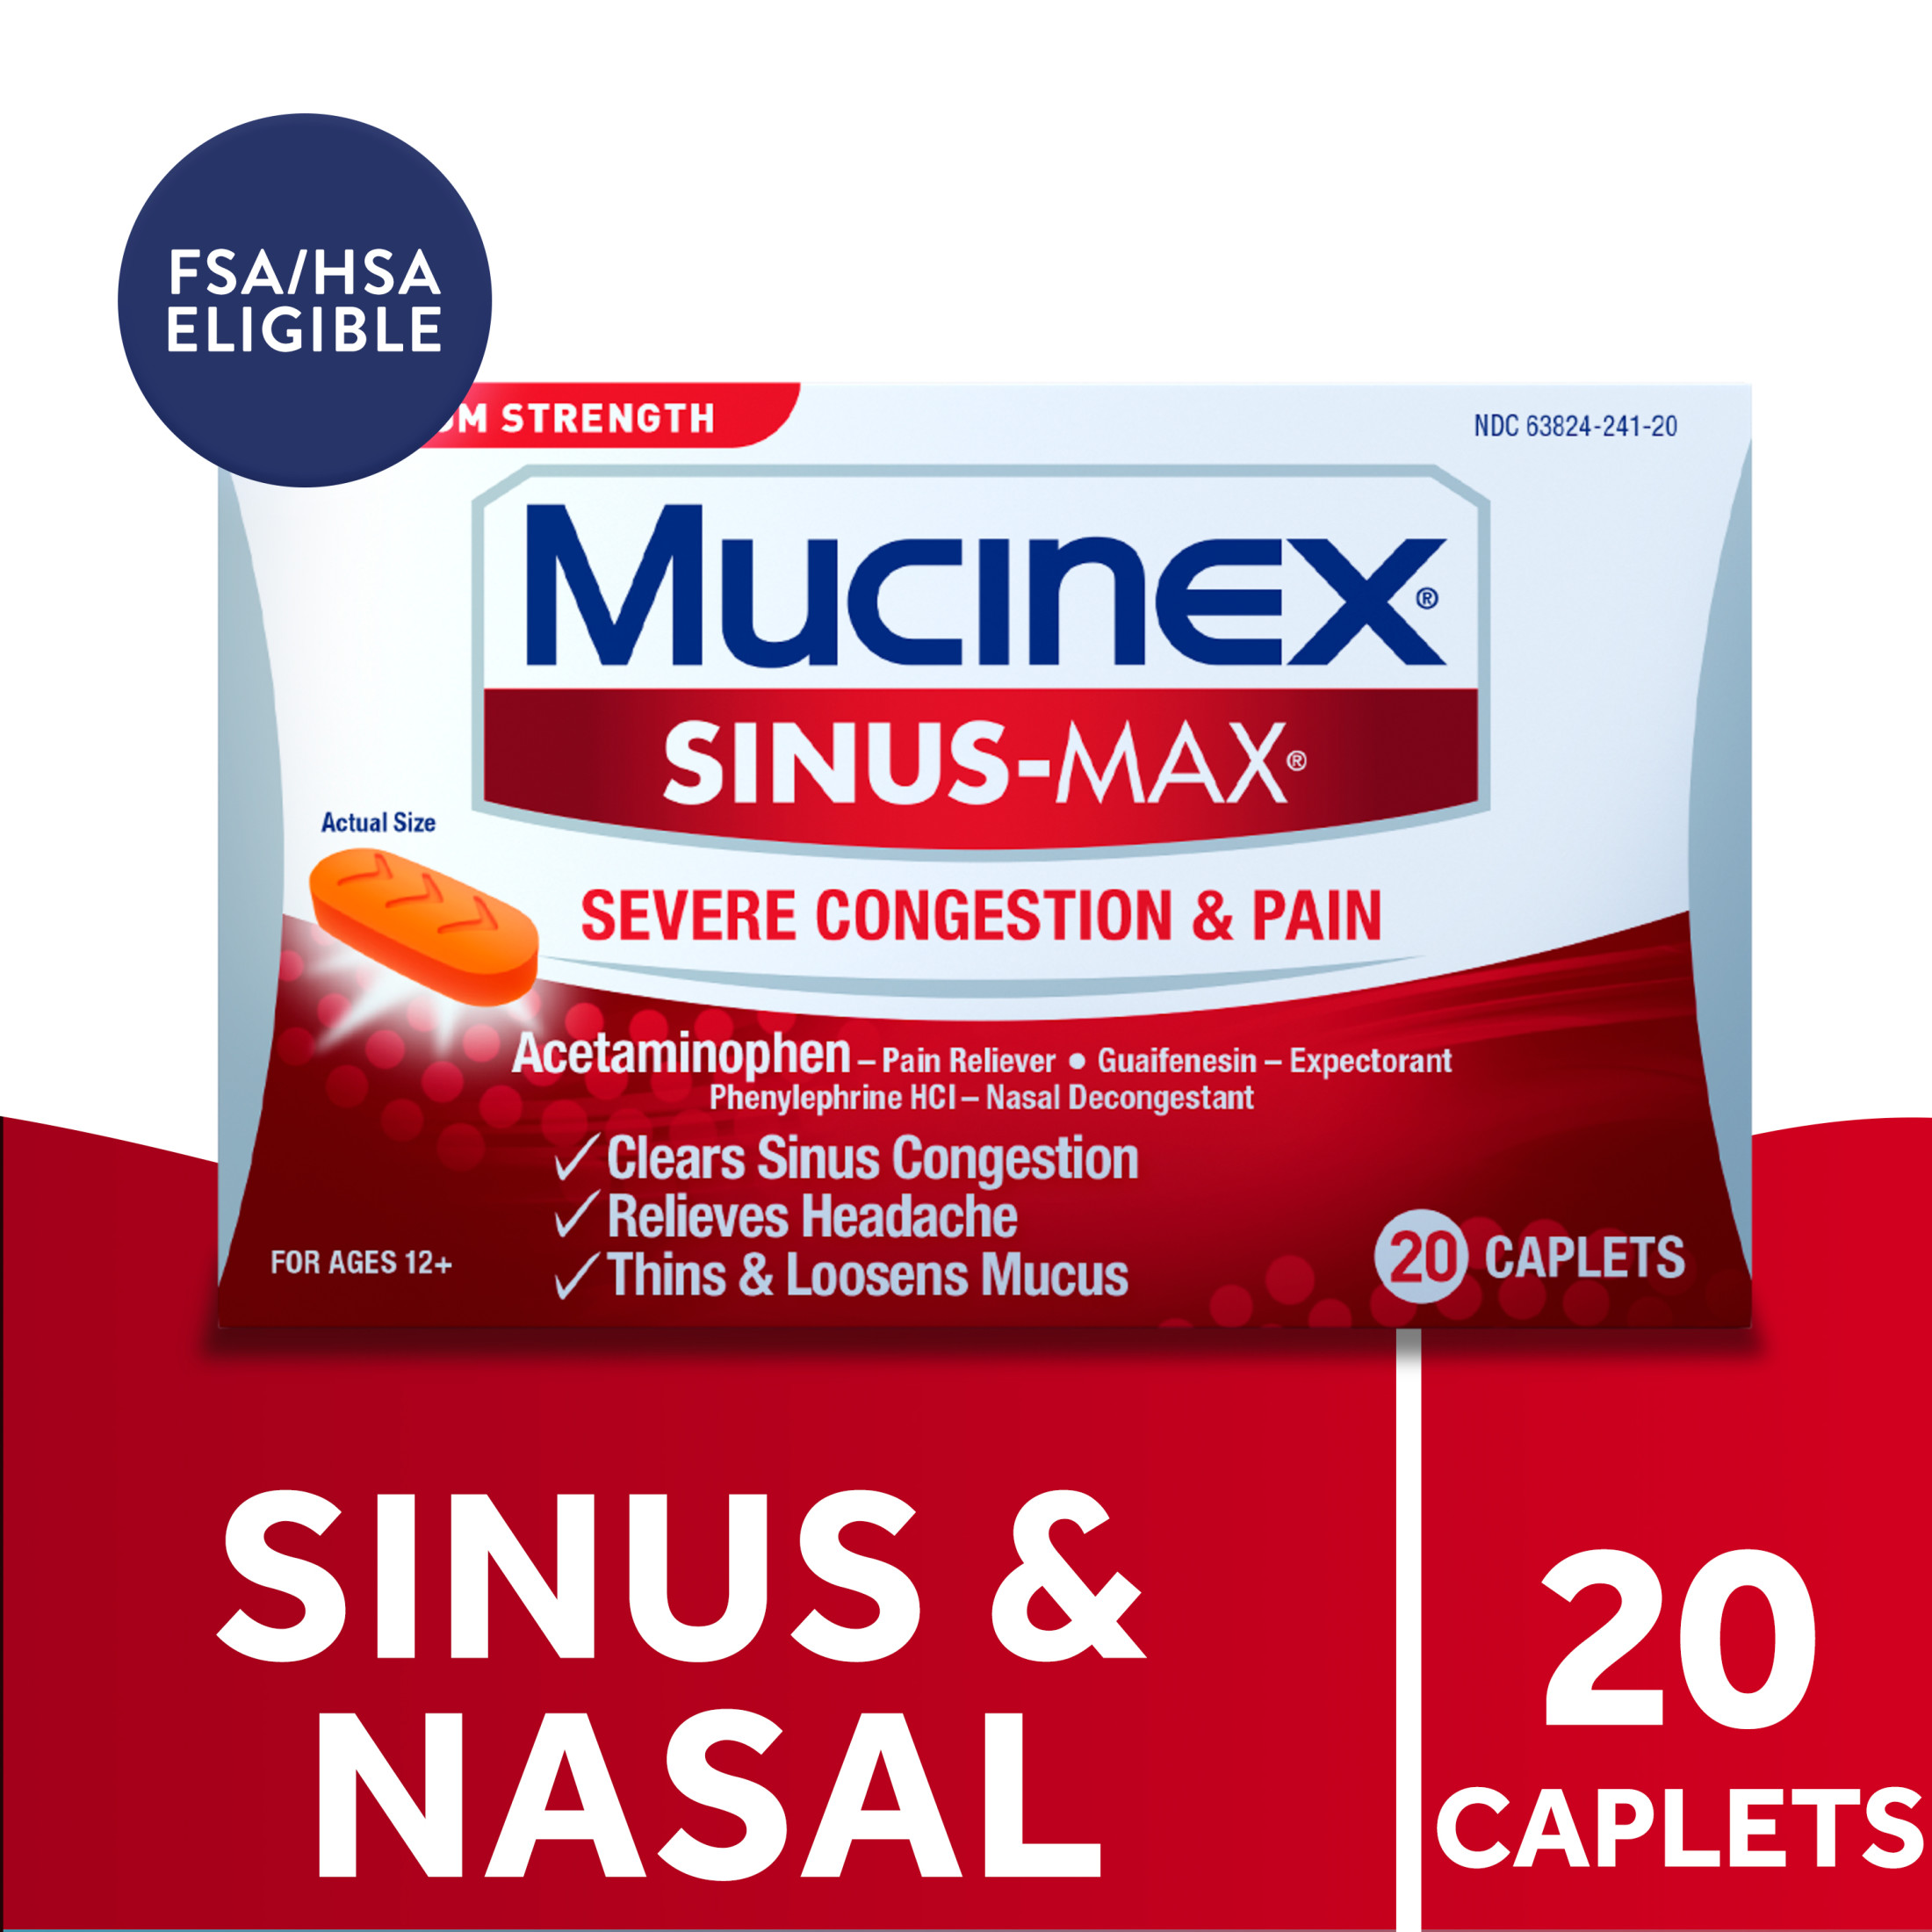 Mucinex Sinus Max Medicine, Severe Congestion & Pain Relief, Nasal Decongestant, 20 Caplets - image 1 of 9